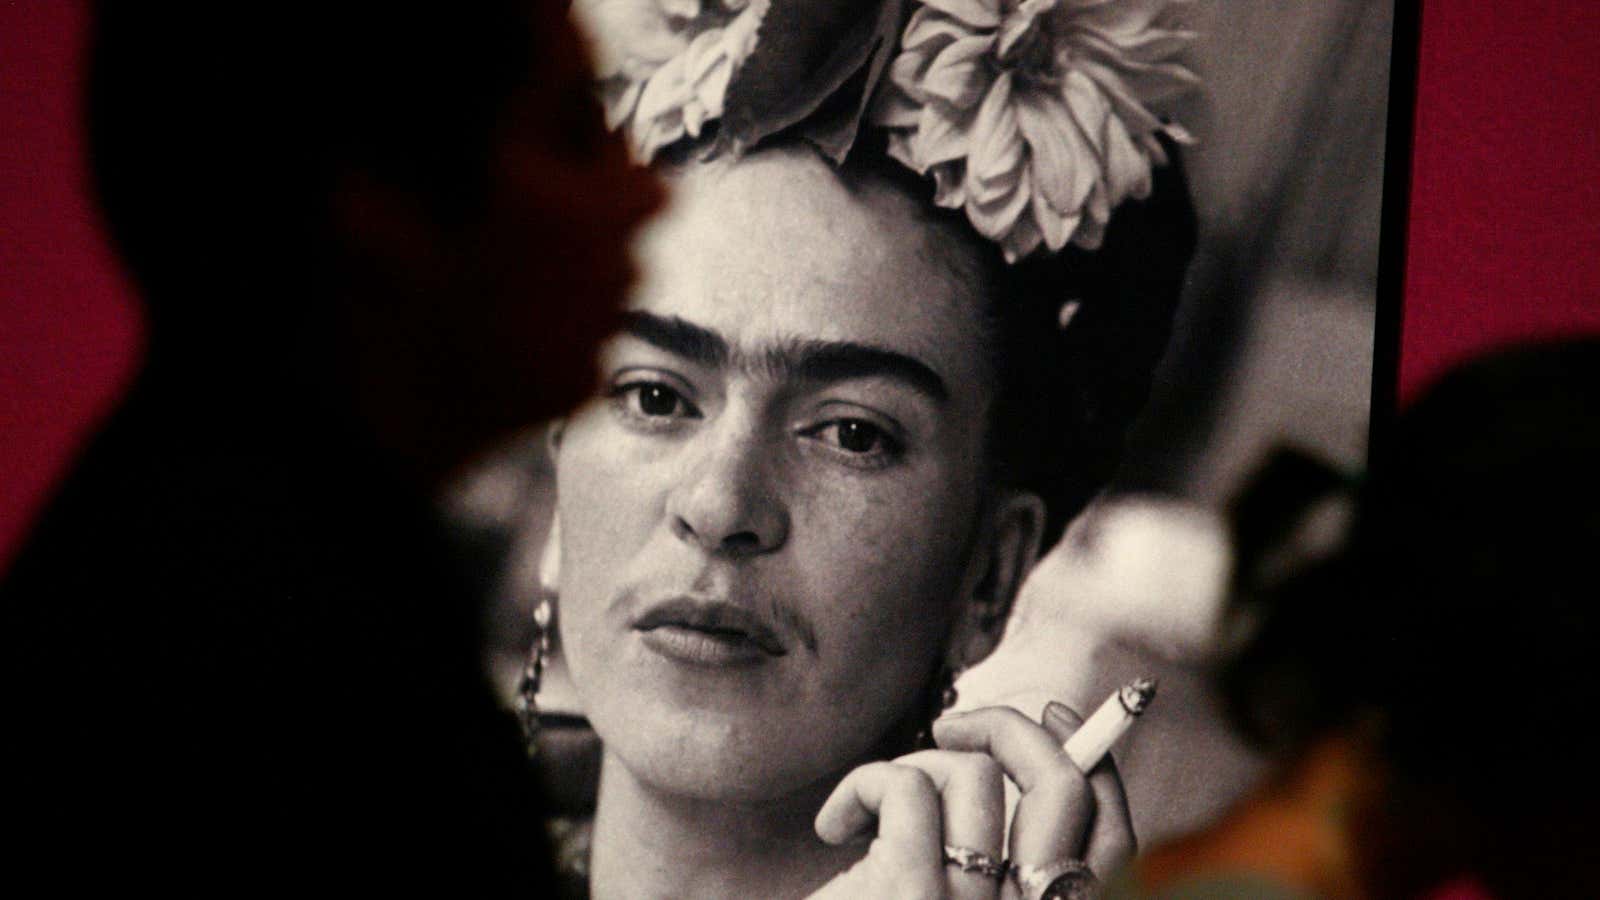 Ulta plucked Frida Kahlo’s eyebrow for the artist’s themed makeup kit